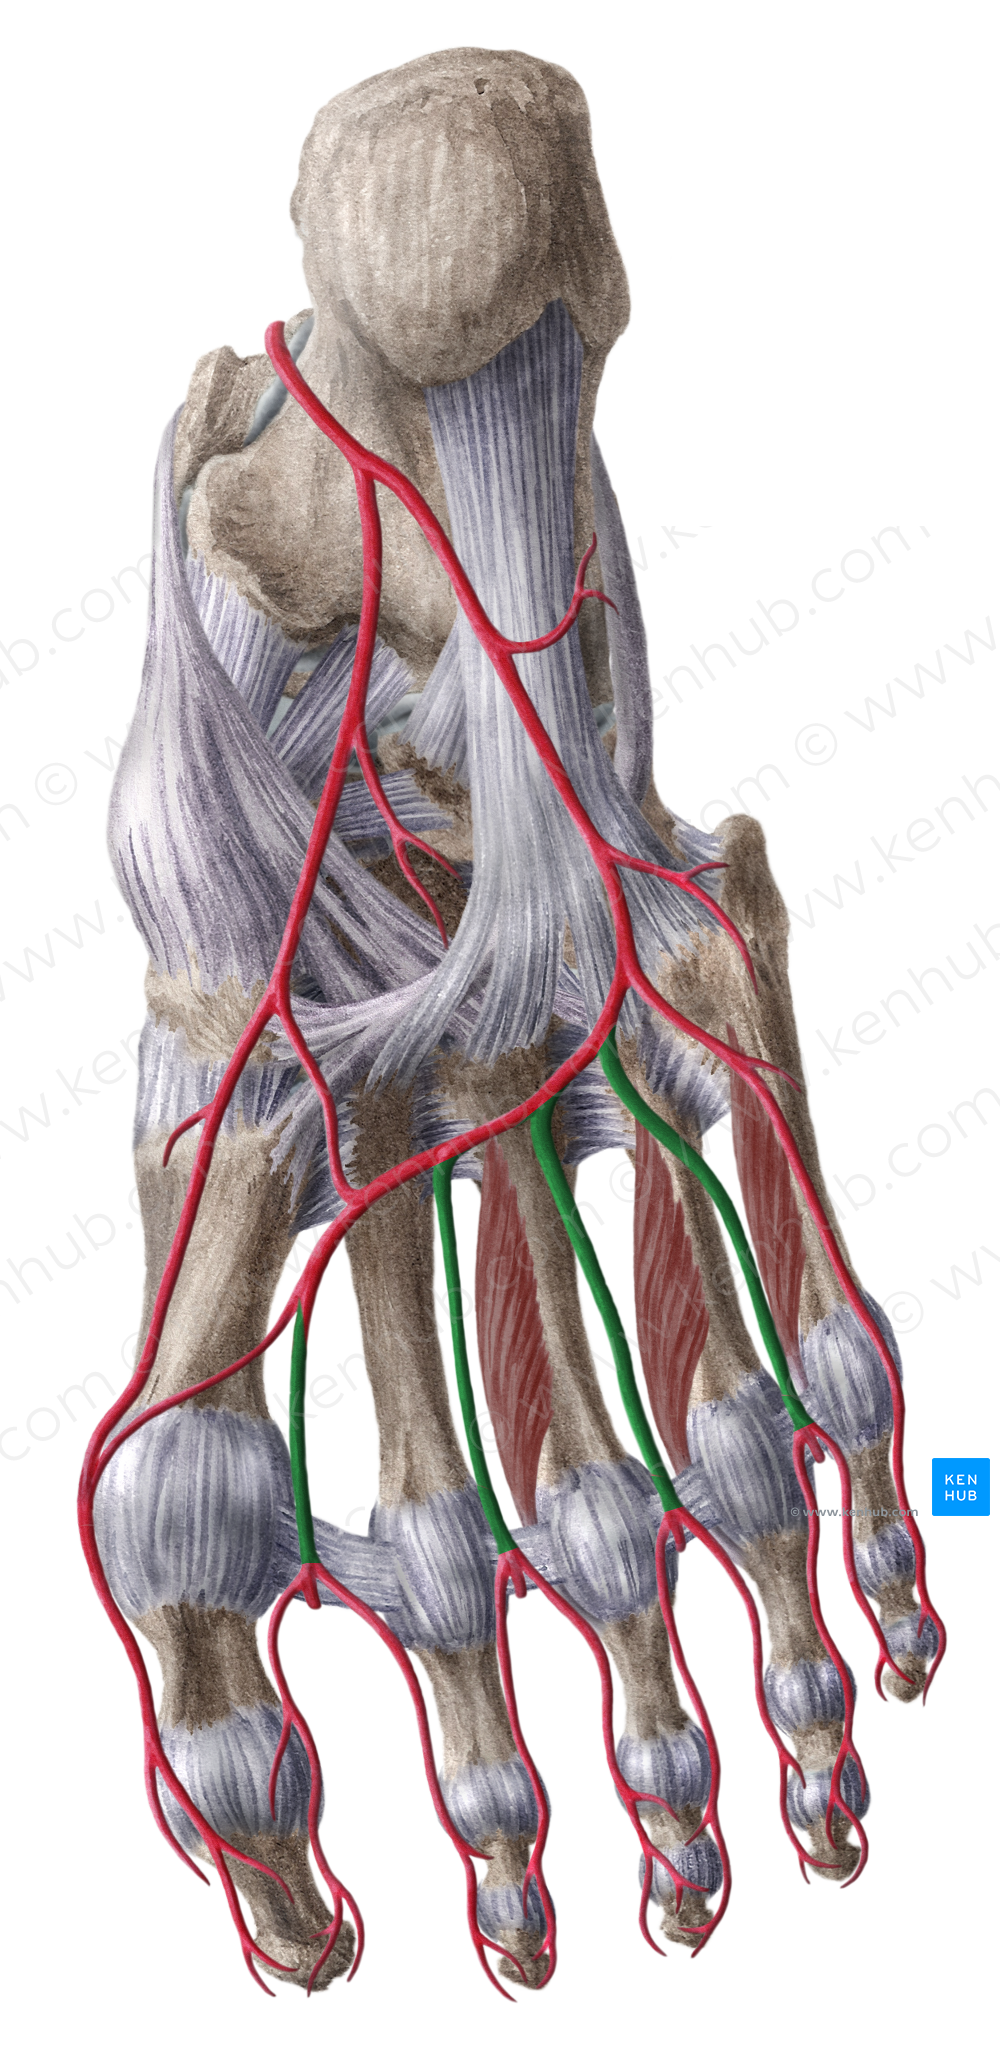 Plantar metatarsal arteries (#1174)